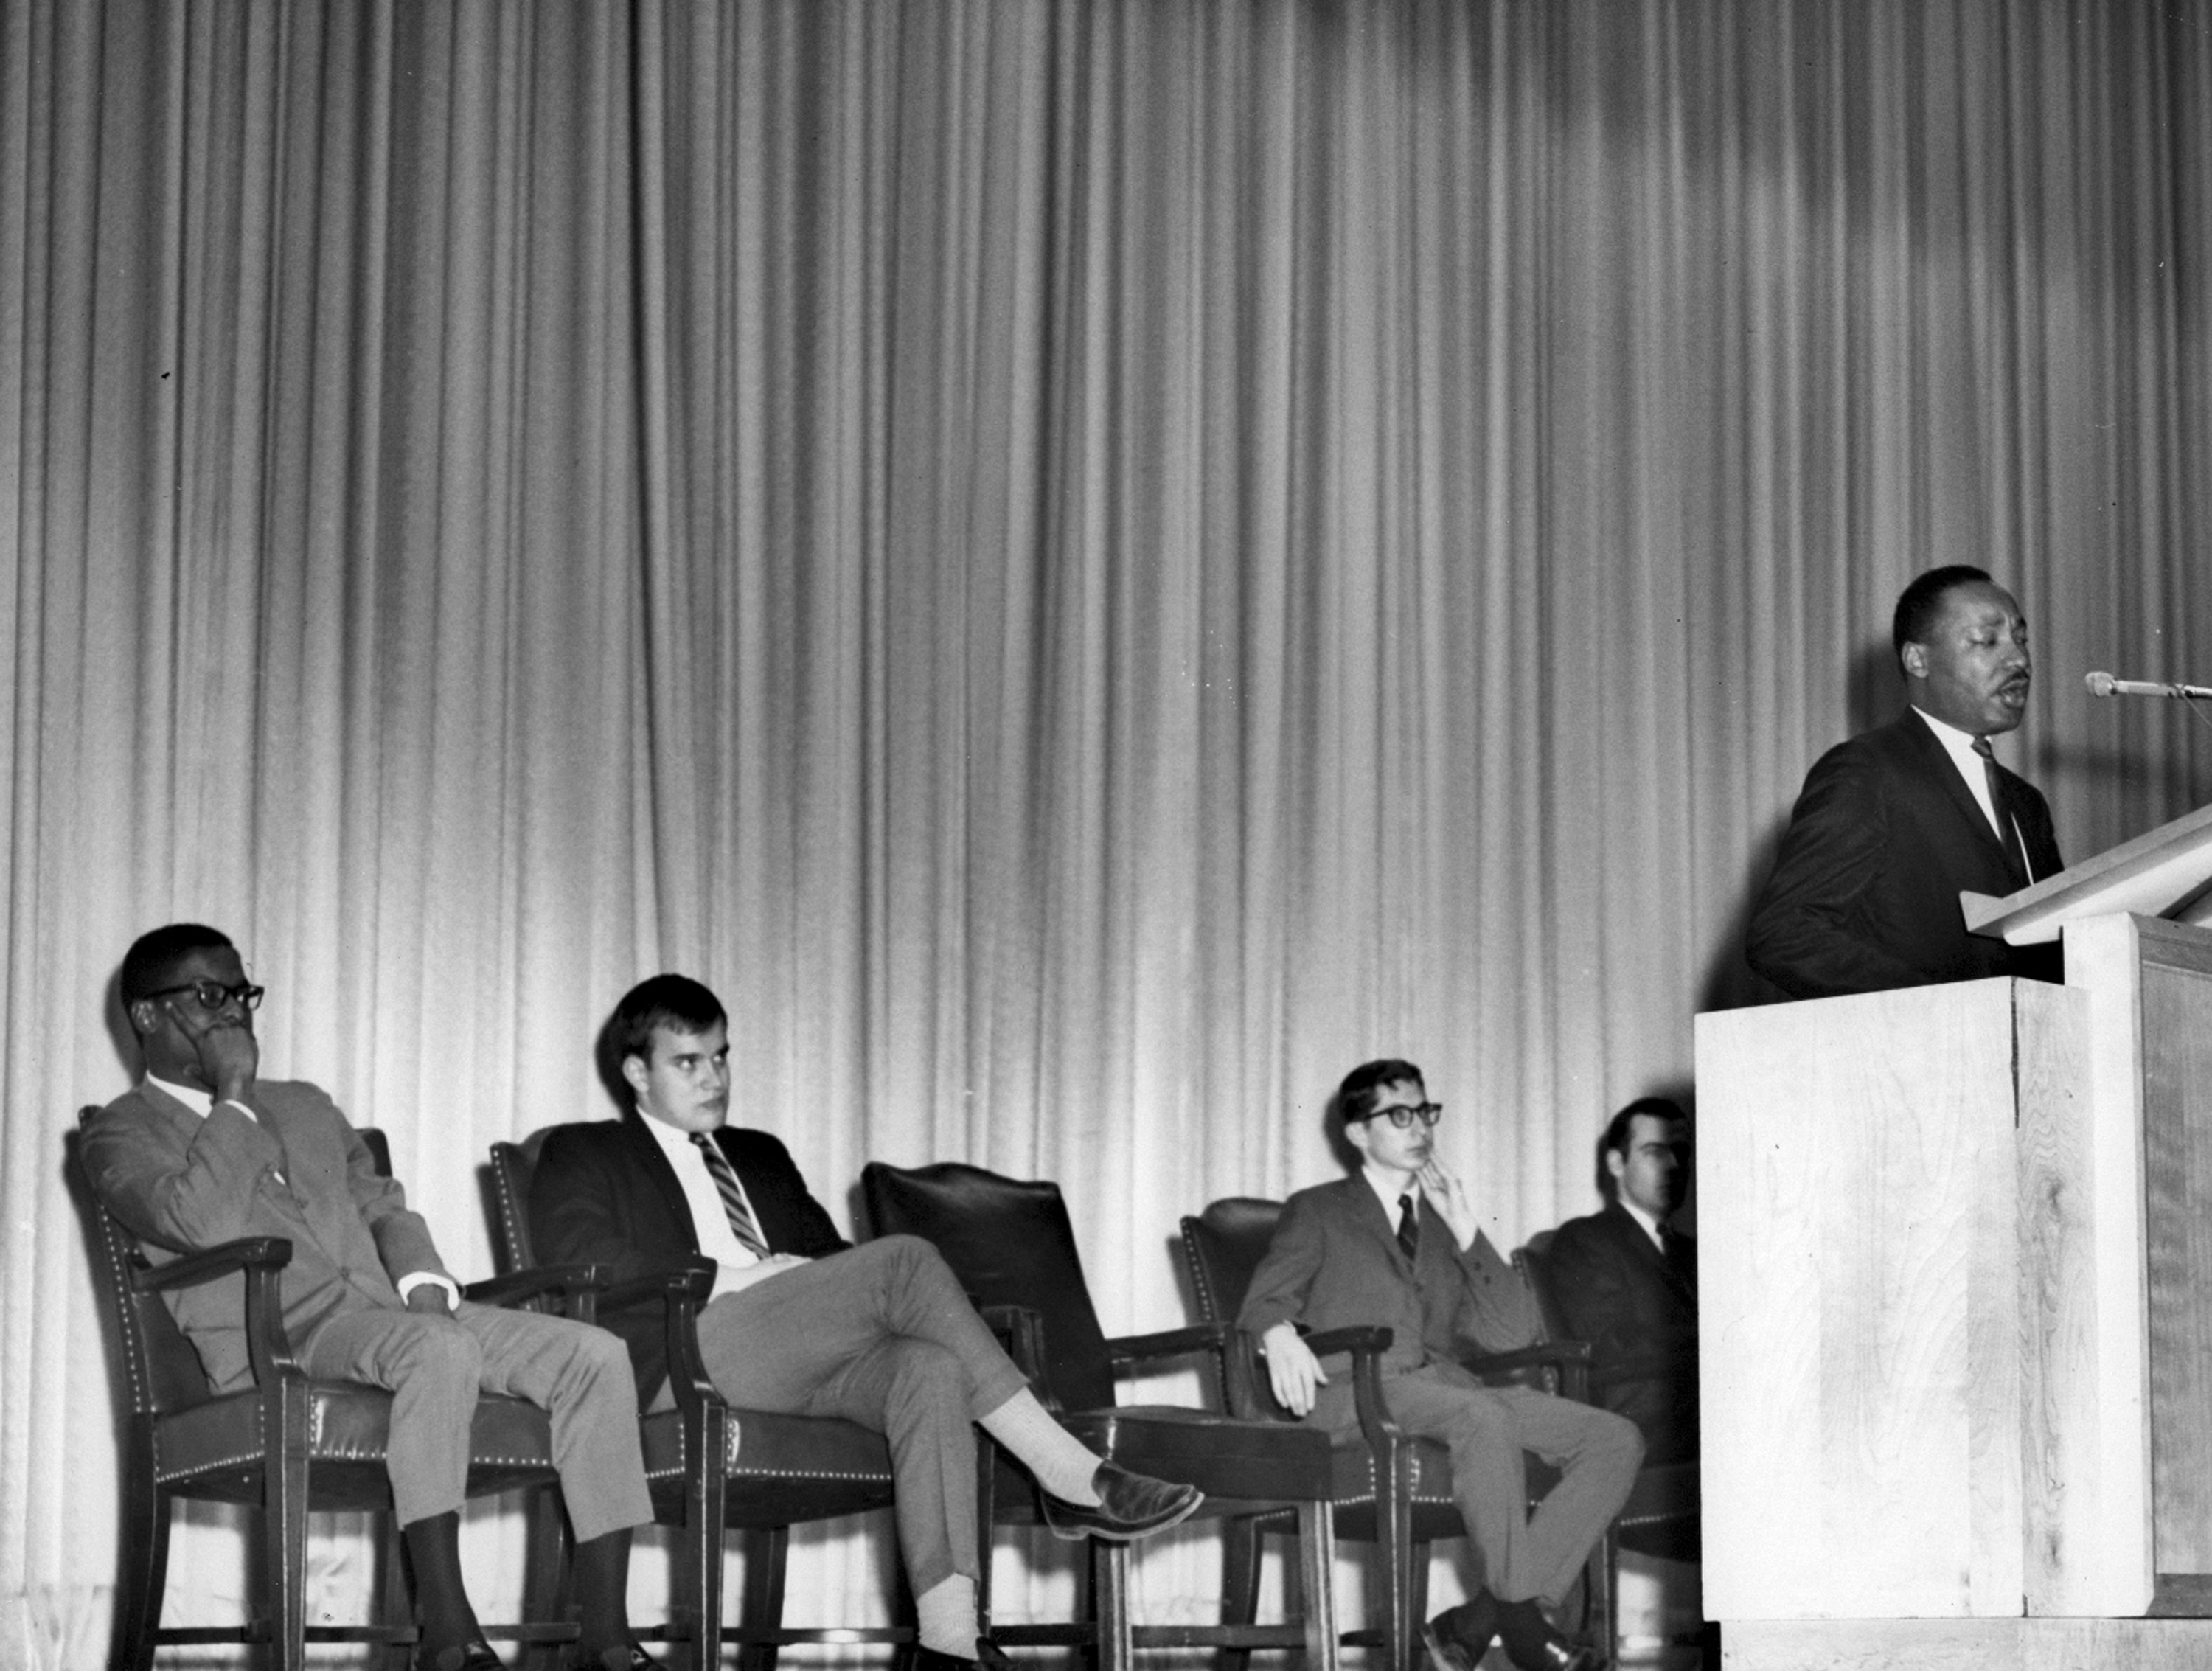 Dr. Martin Luther King speaks at SMU, 1966